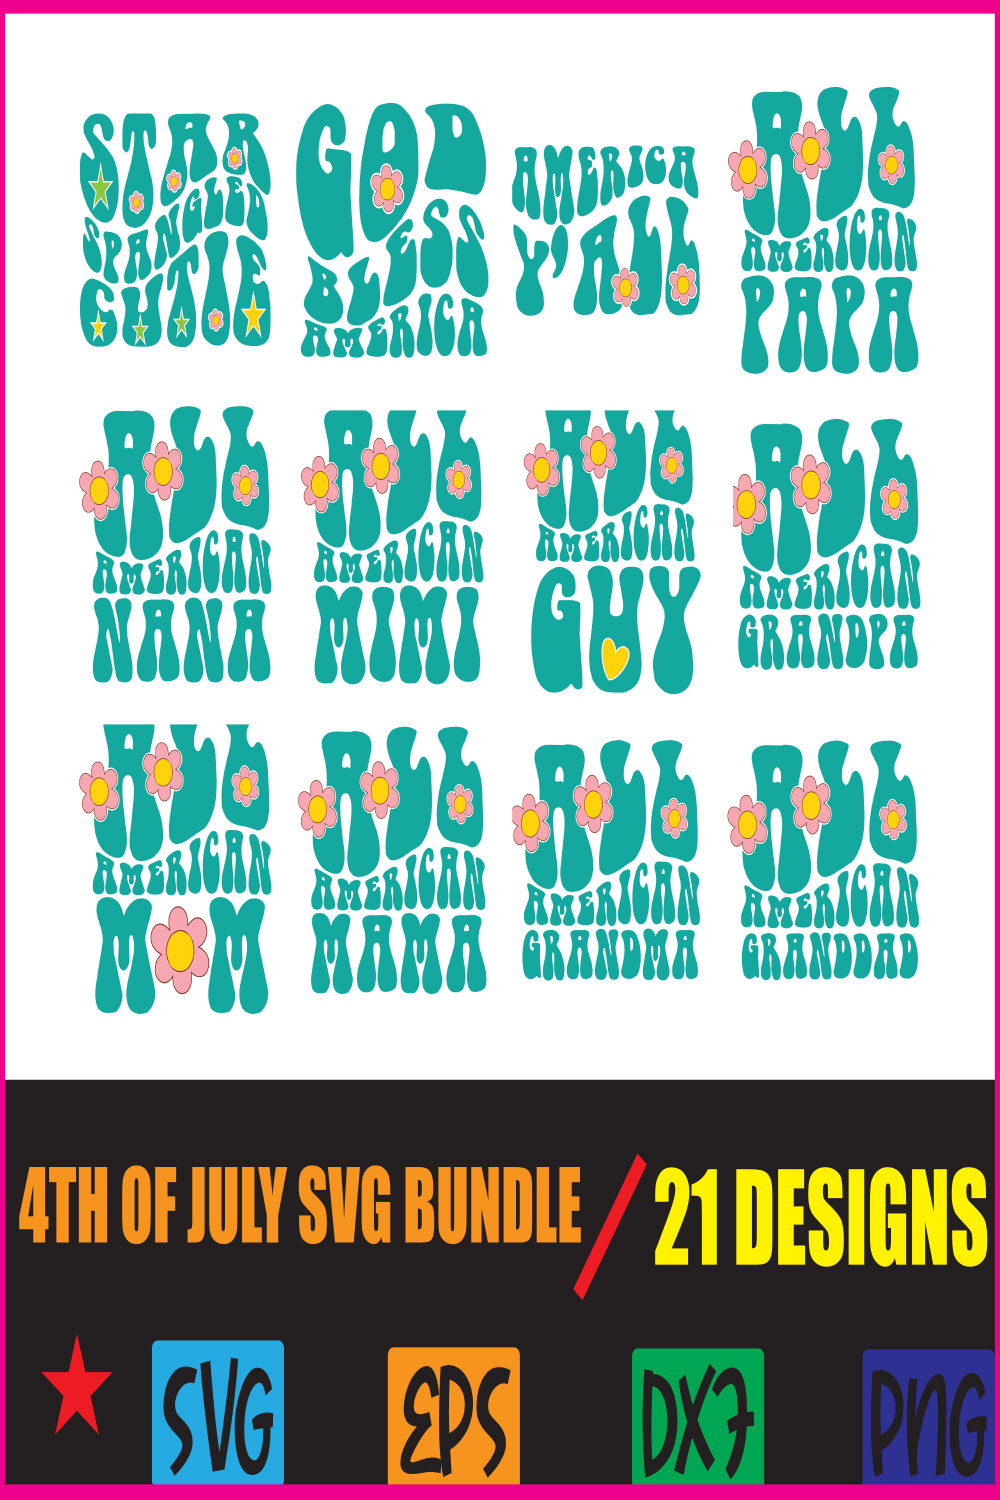 4th of July Svg Bundle pinterest preview image.